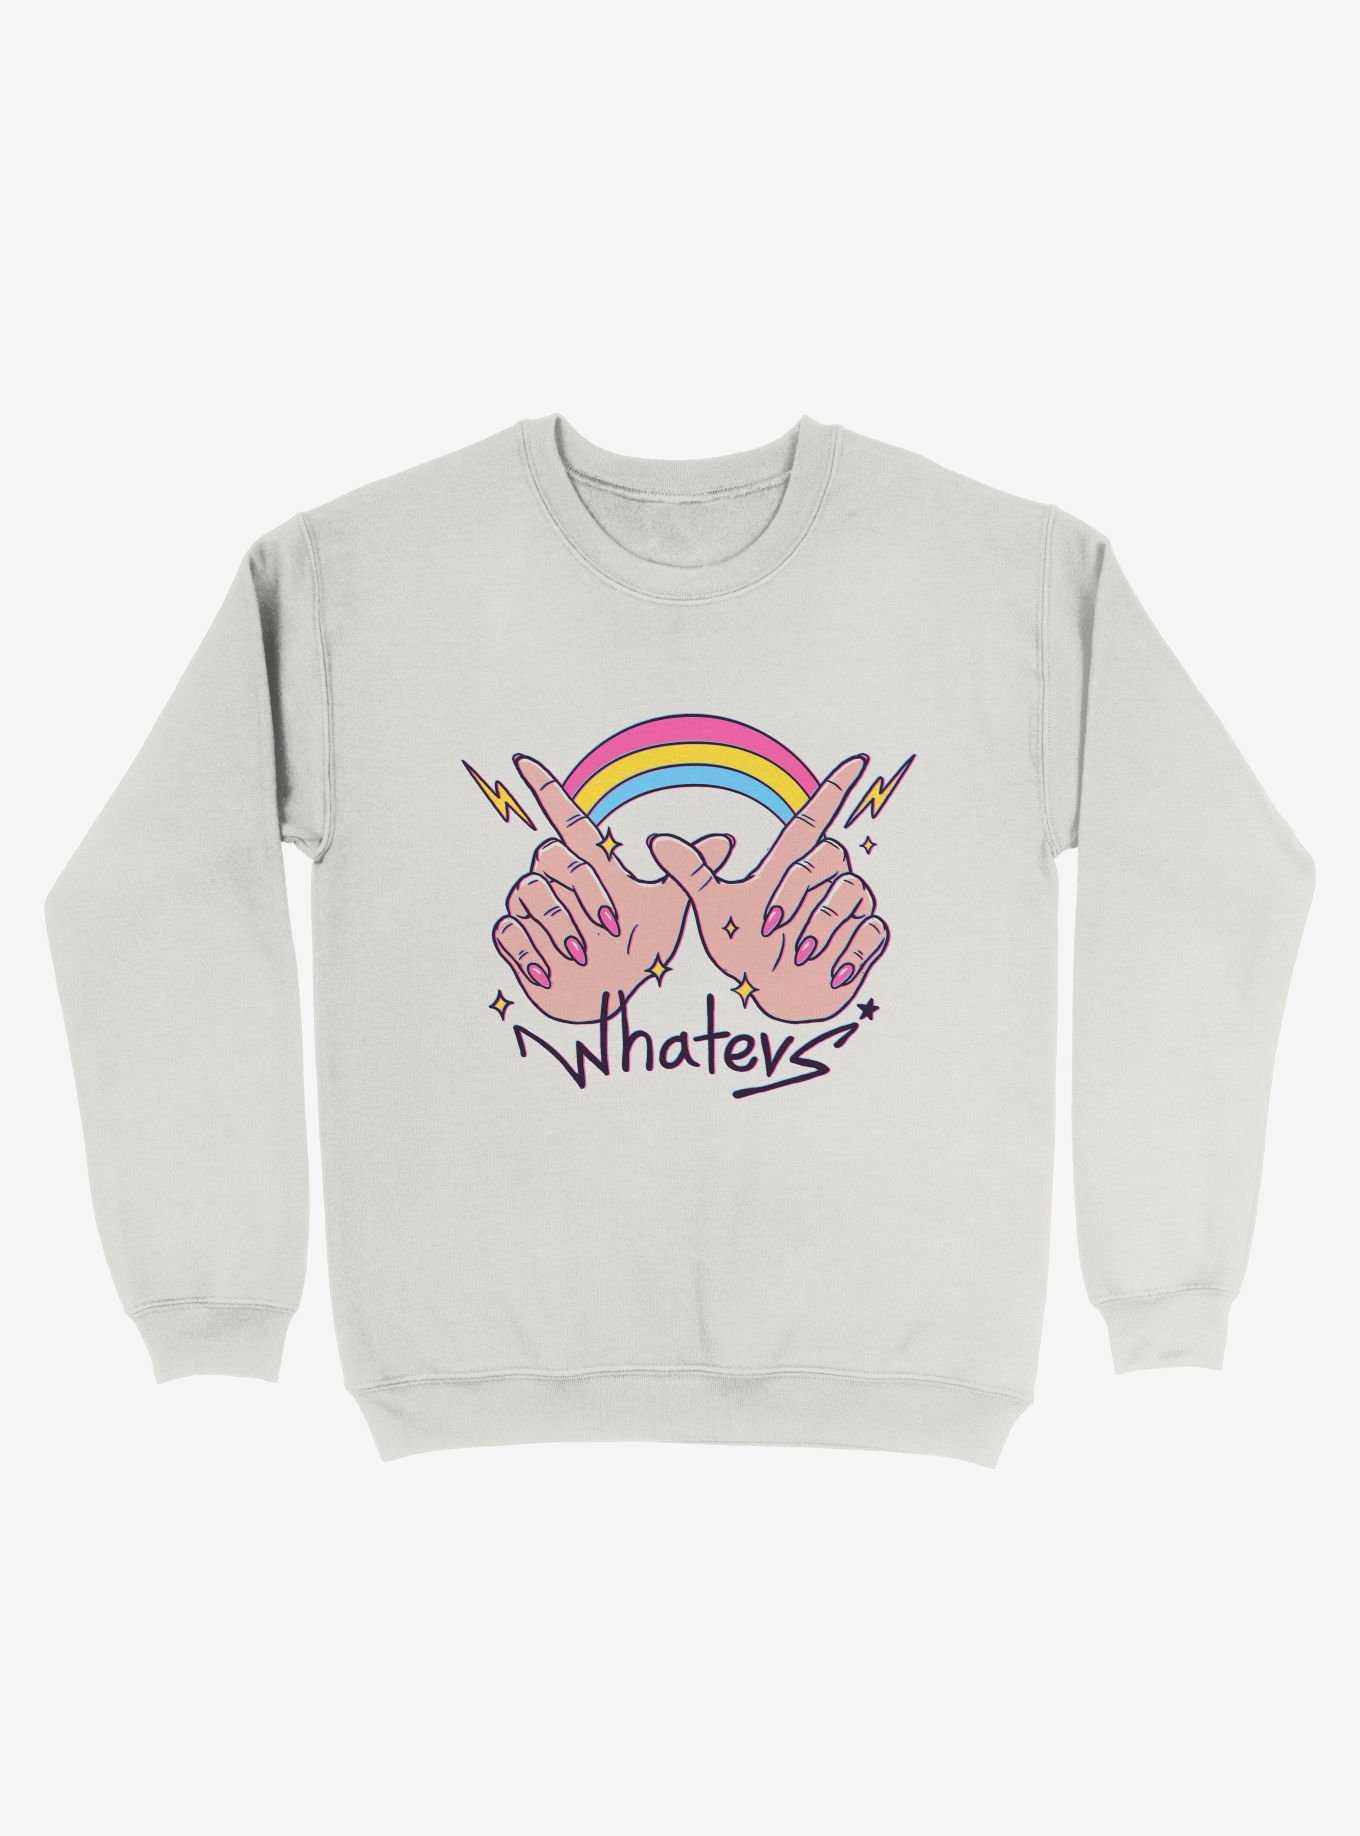 Whatevs! Rainbow Sweatshirt, , hi-res